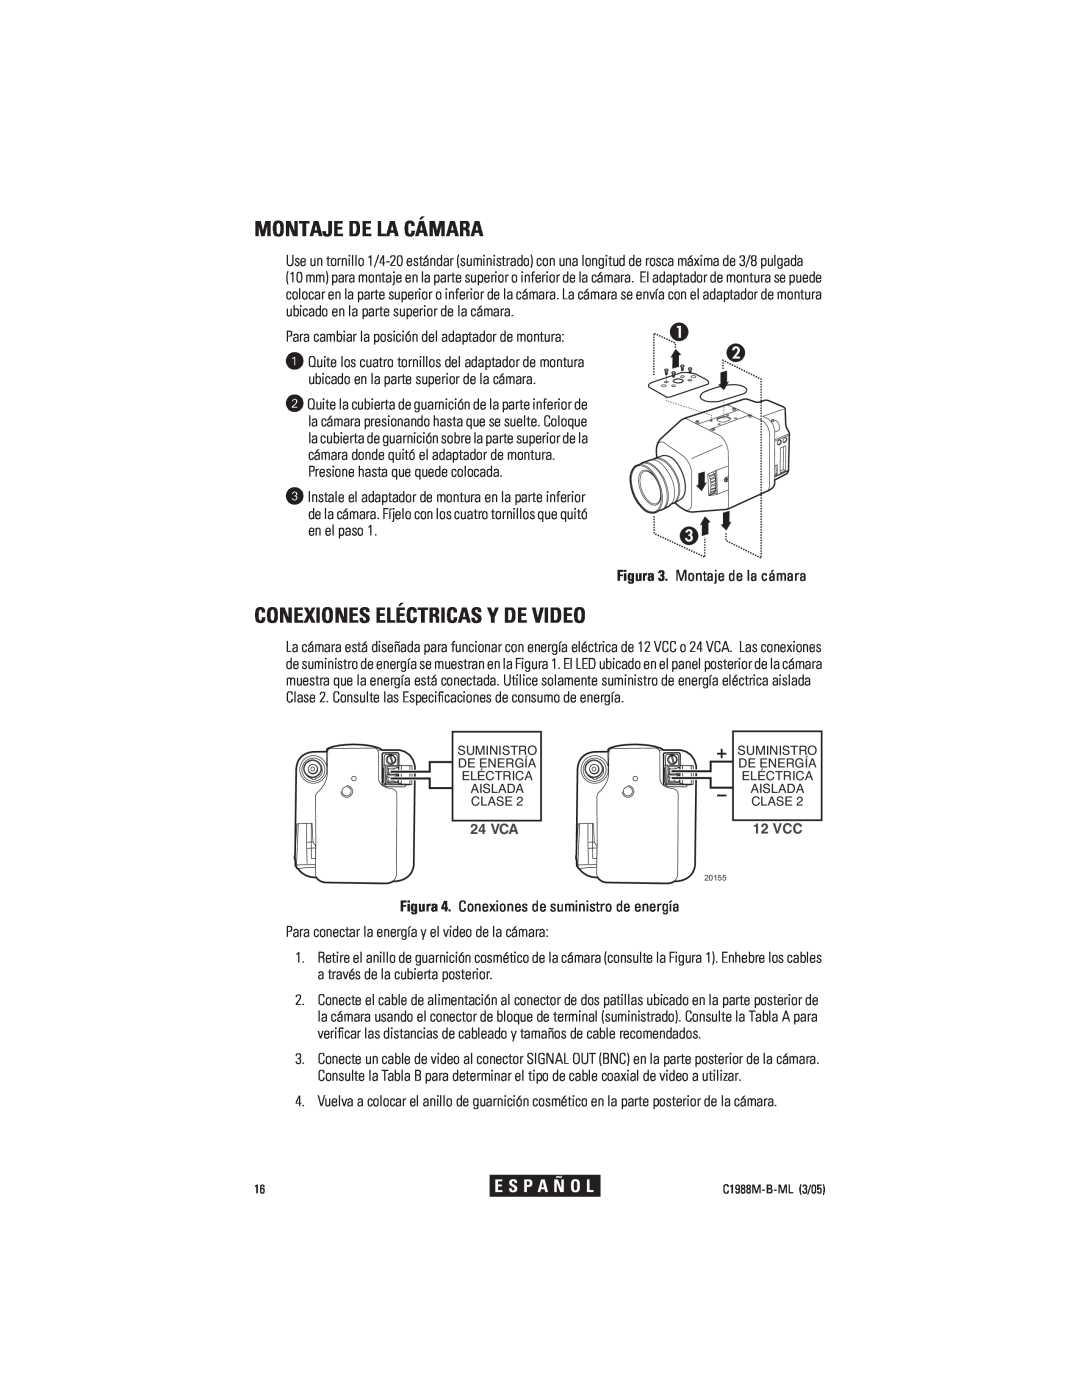 Pelco CC3751H-2 manual Montaje De La Cámara, Conexiones Eléctricas Y De Video, 24 VCA, 12 VCC, E S P A Ñ O L 